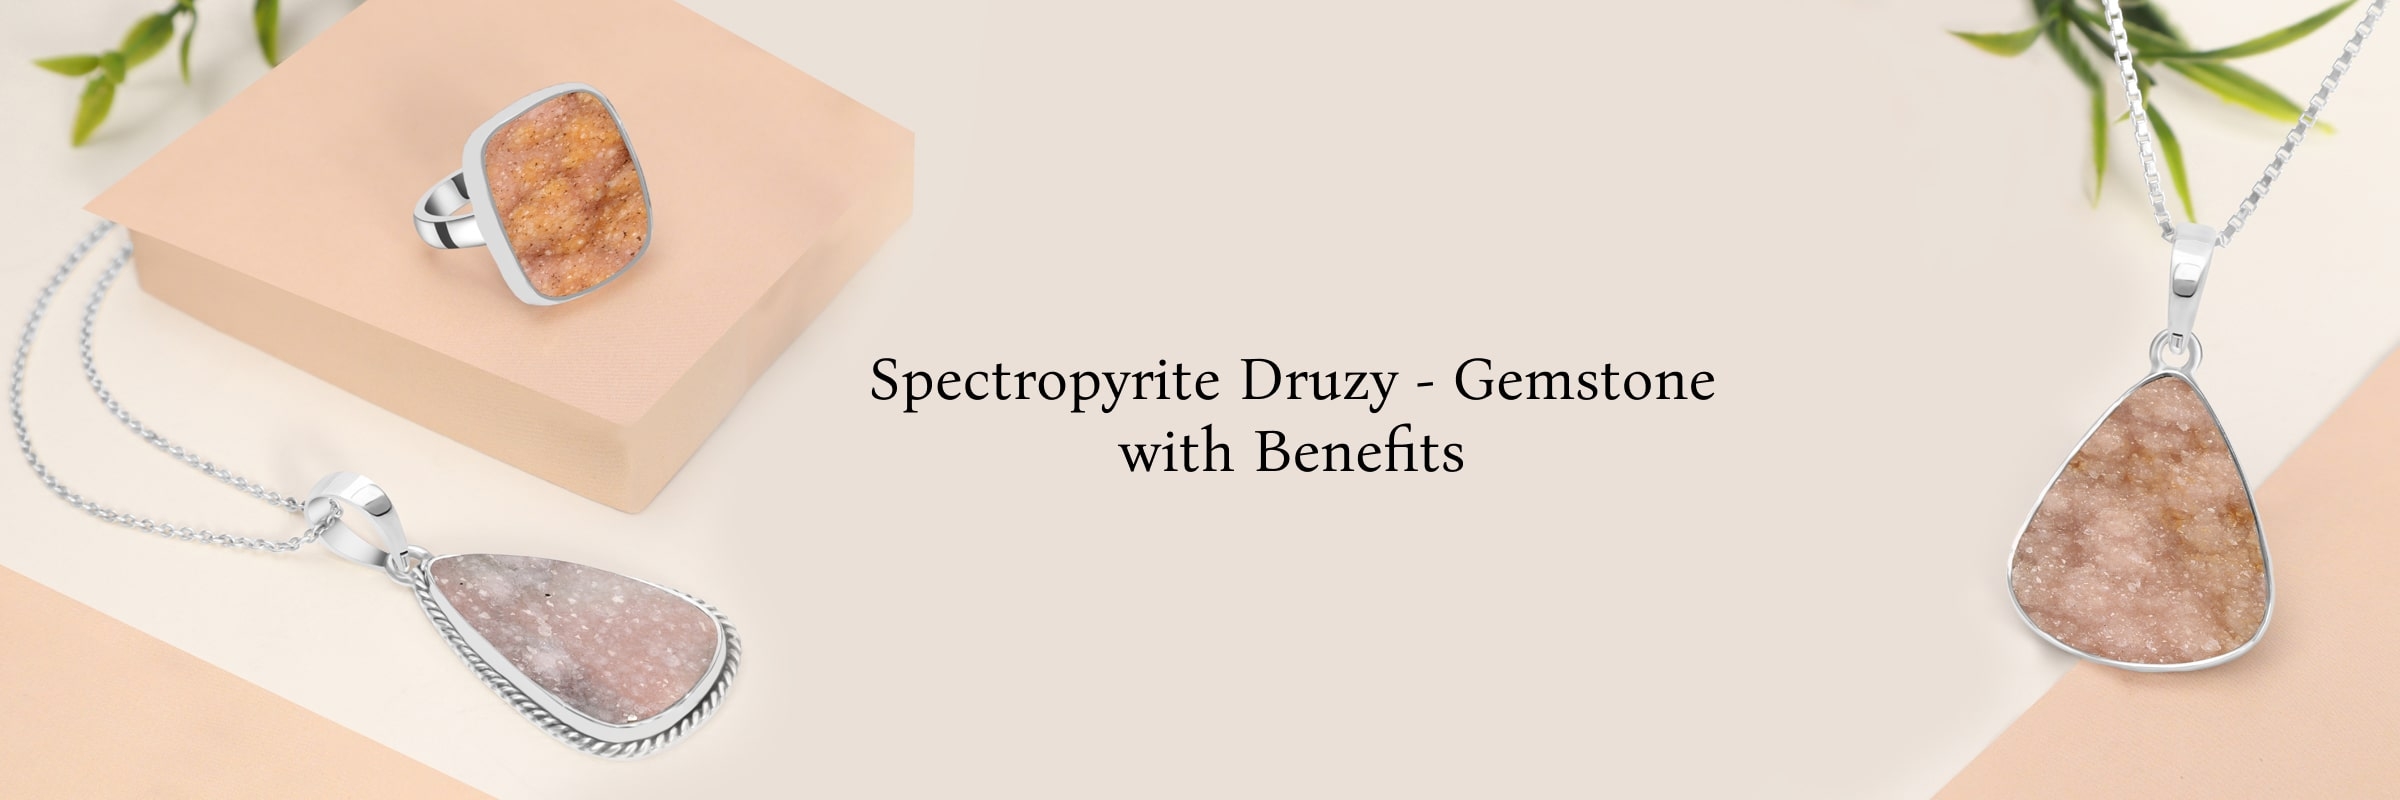 Benefits of Spectropyrite Druzy Gem